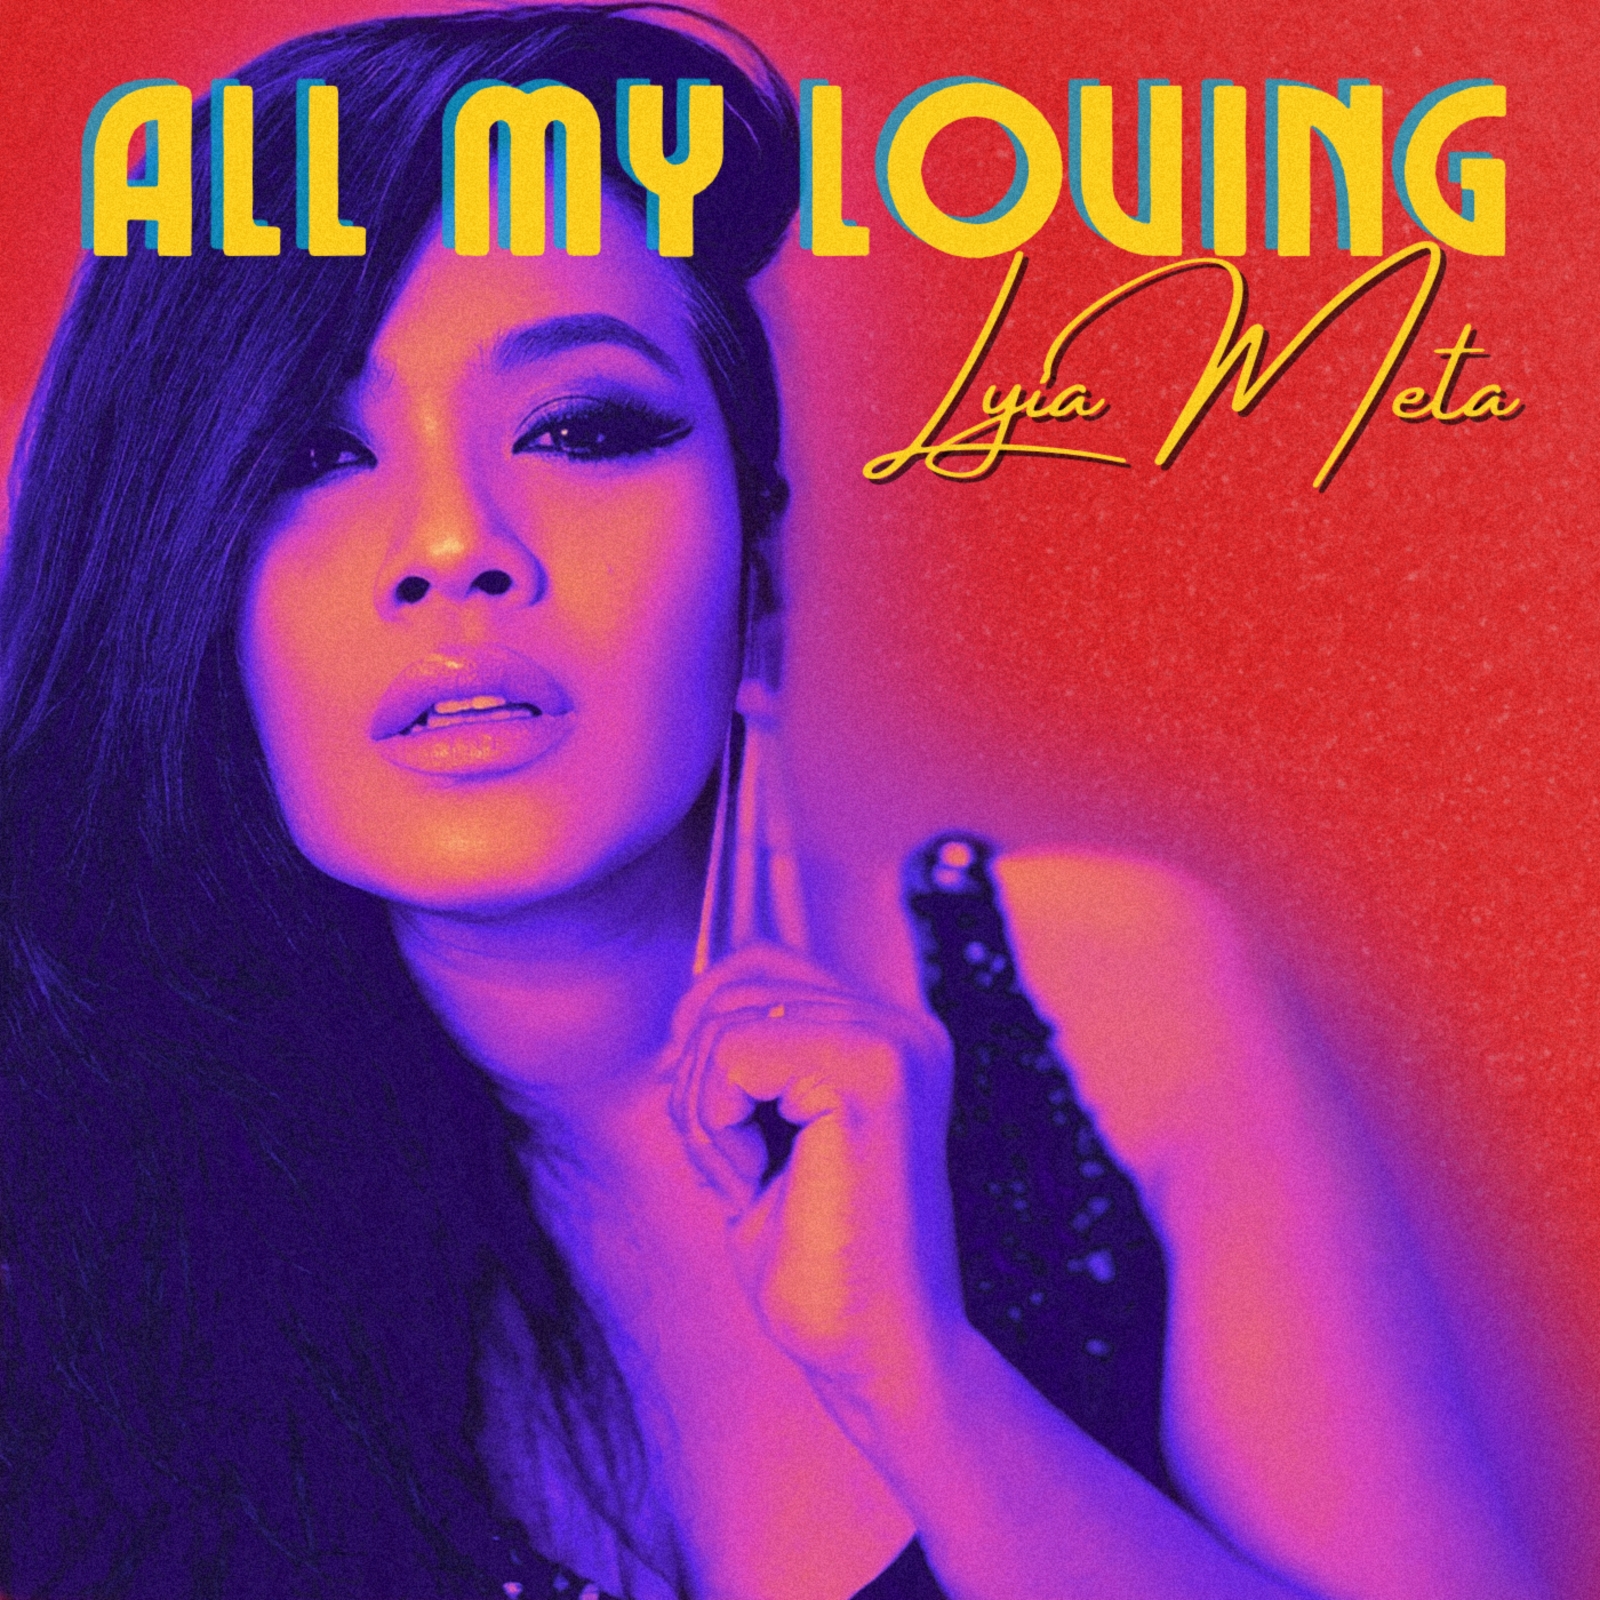 LYIA META – Single Review: “All My Loving”